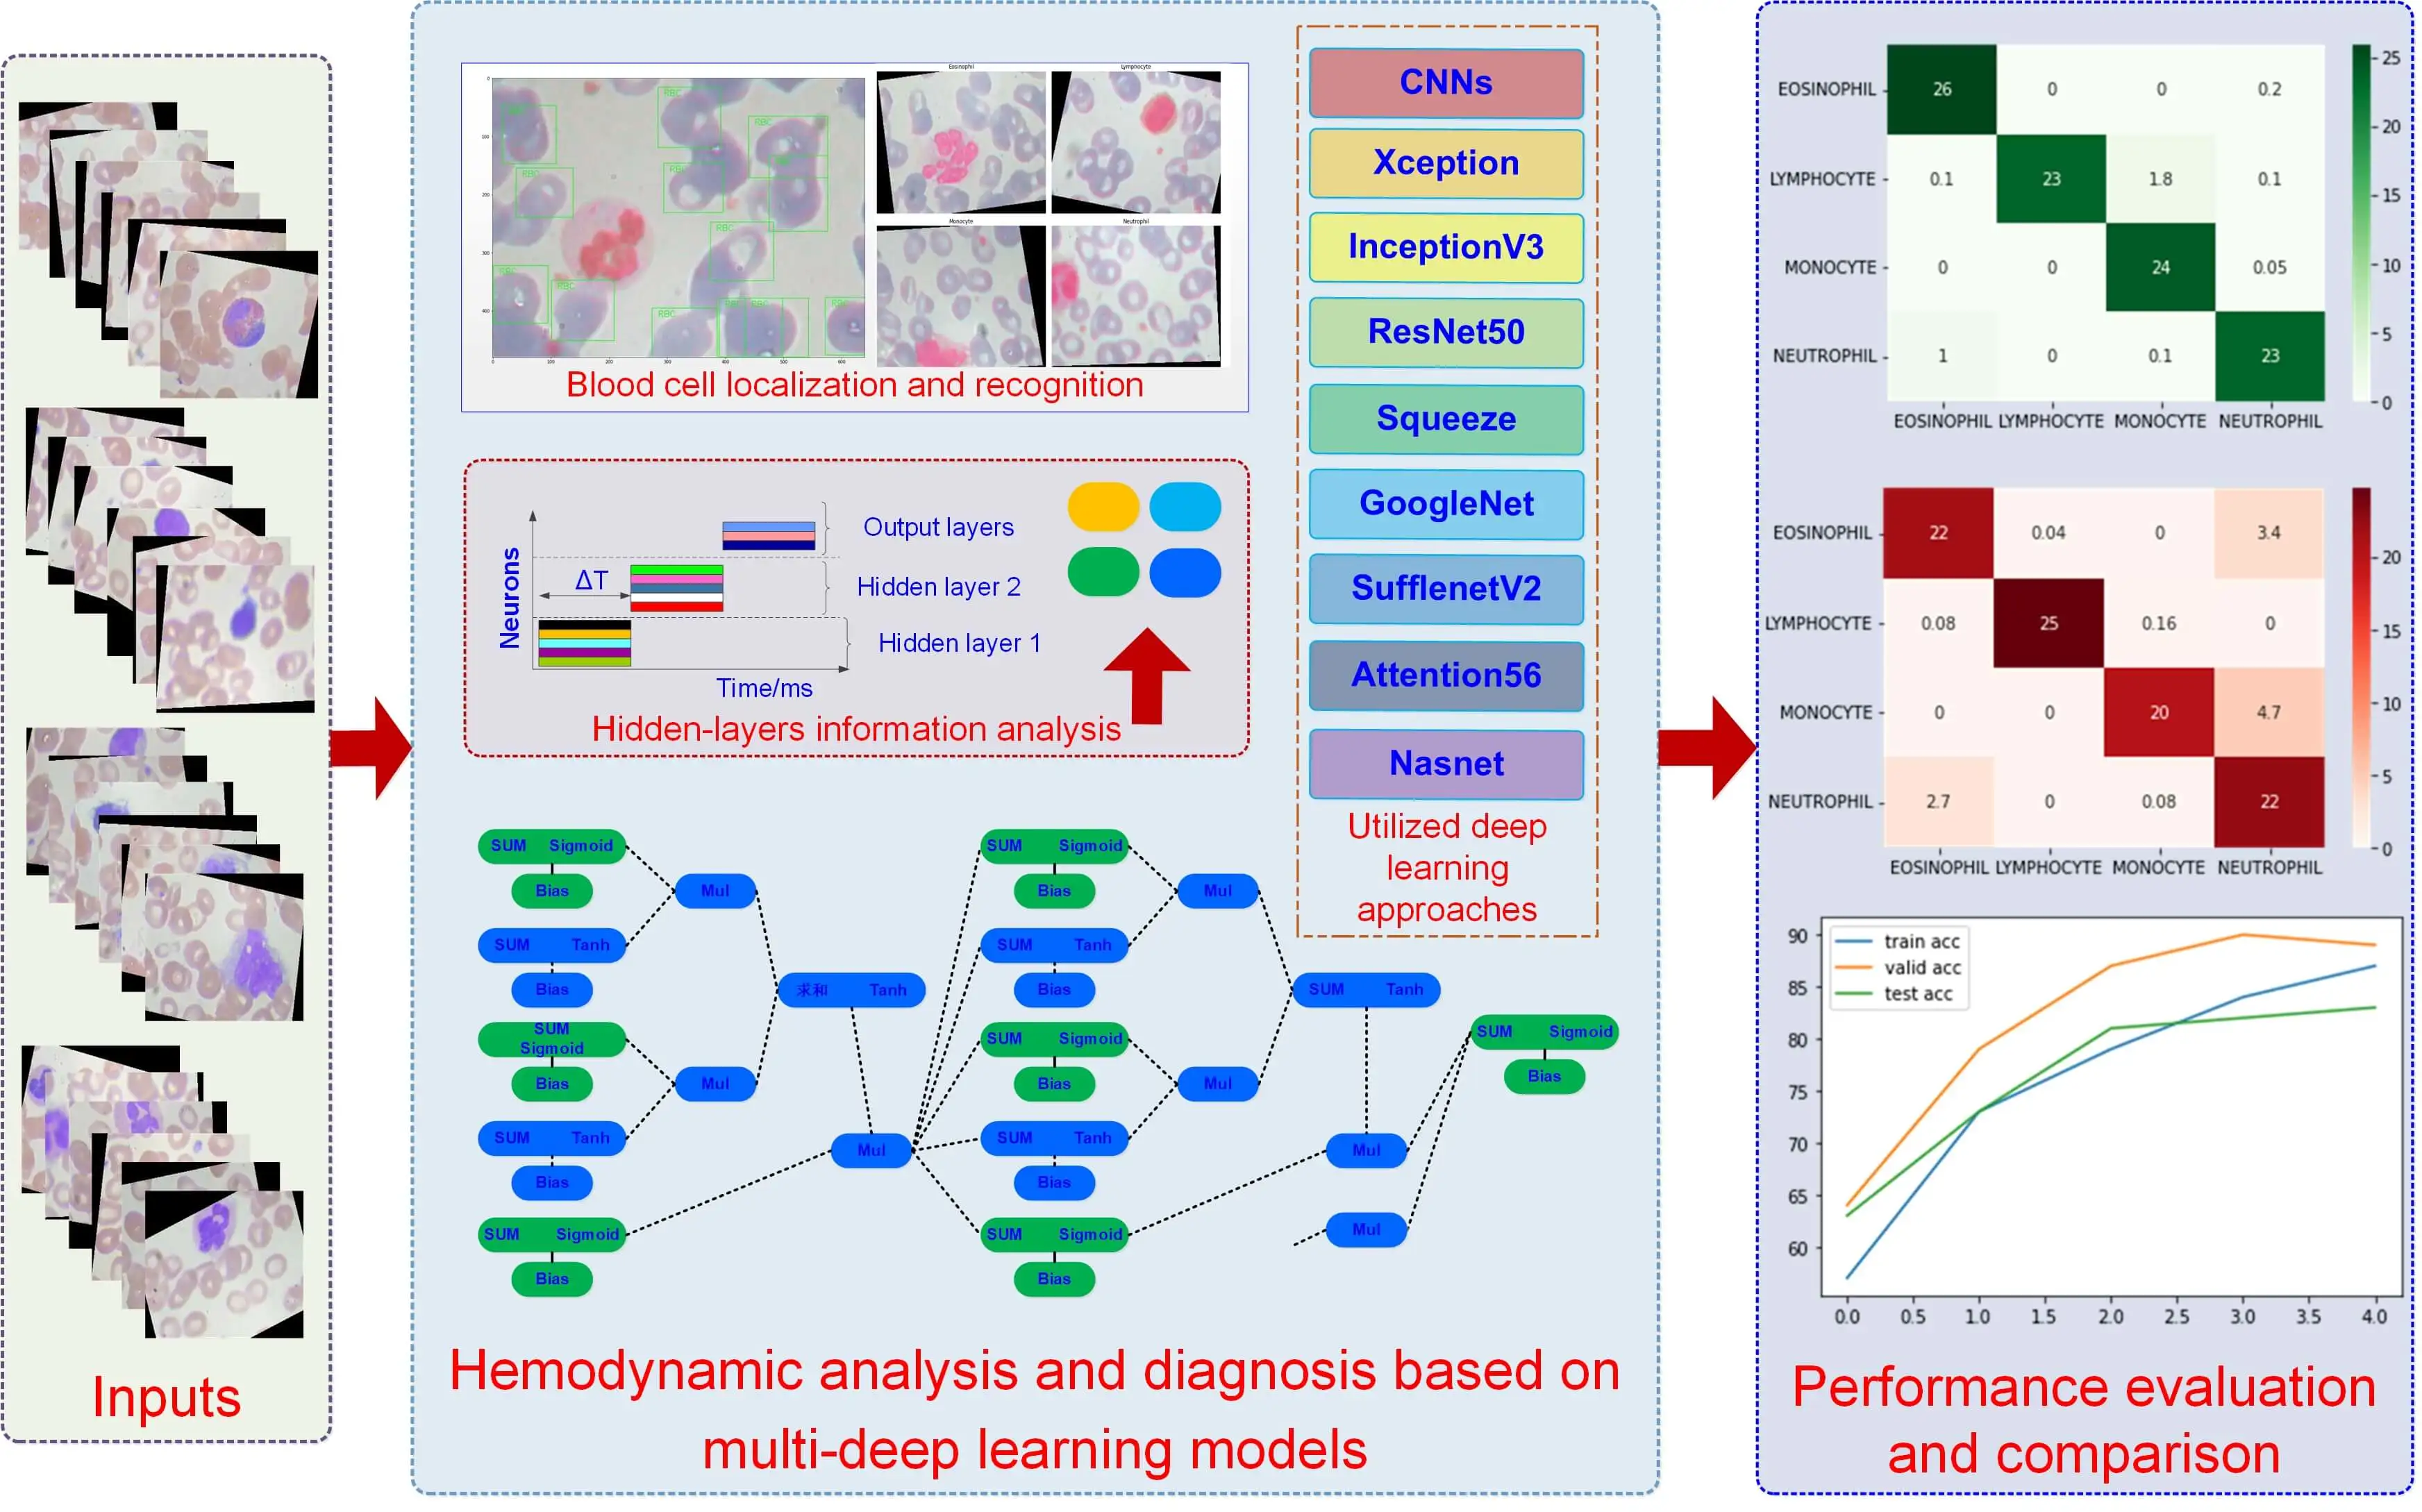 Hemodynamic Analysis and Diagnosis Based on Multi-Deep Learning Models